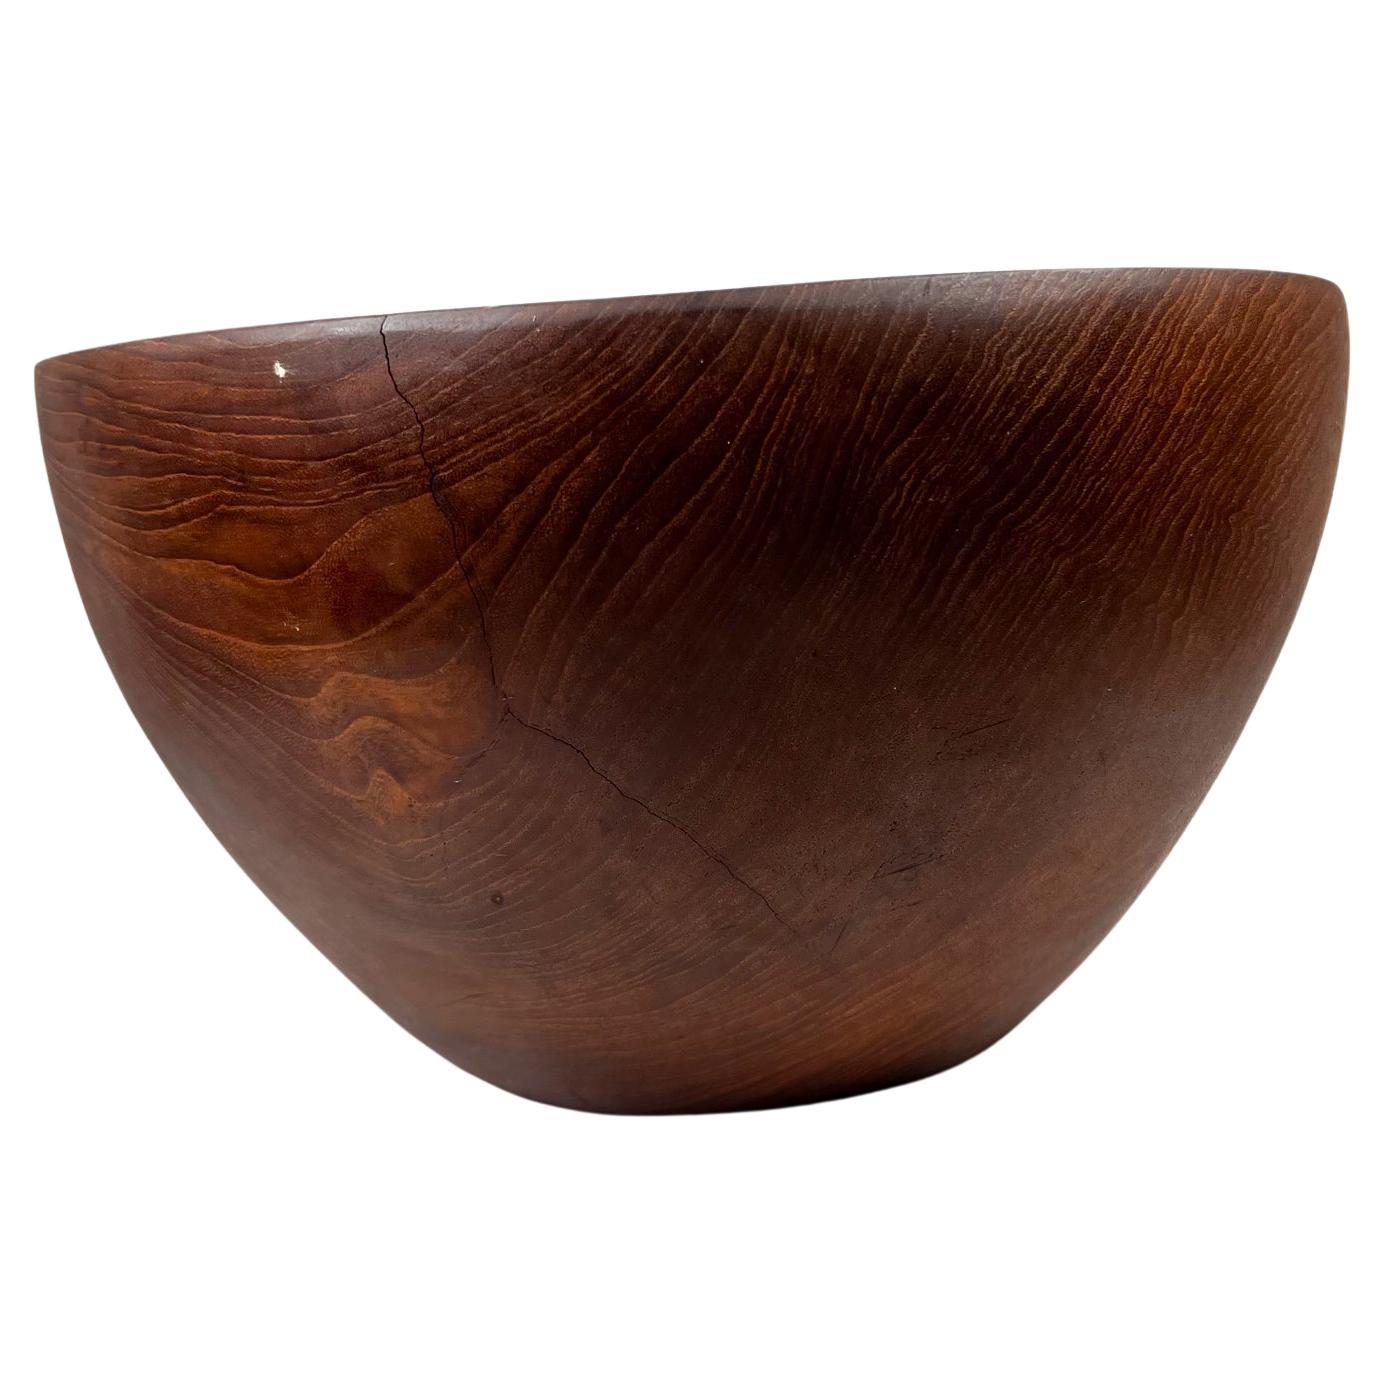 1960s Vintage Sculptural Teakwood Bowl
Preowned original unrestored vintage condition. Hairline crack on bowl
12.25 diameter x 6.63 h
Review all images.